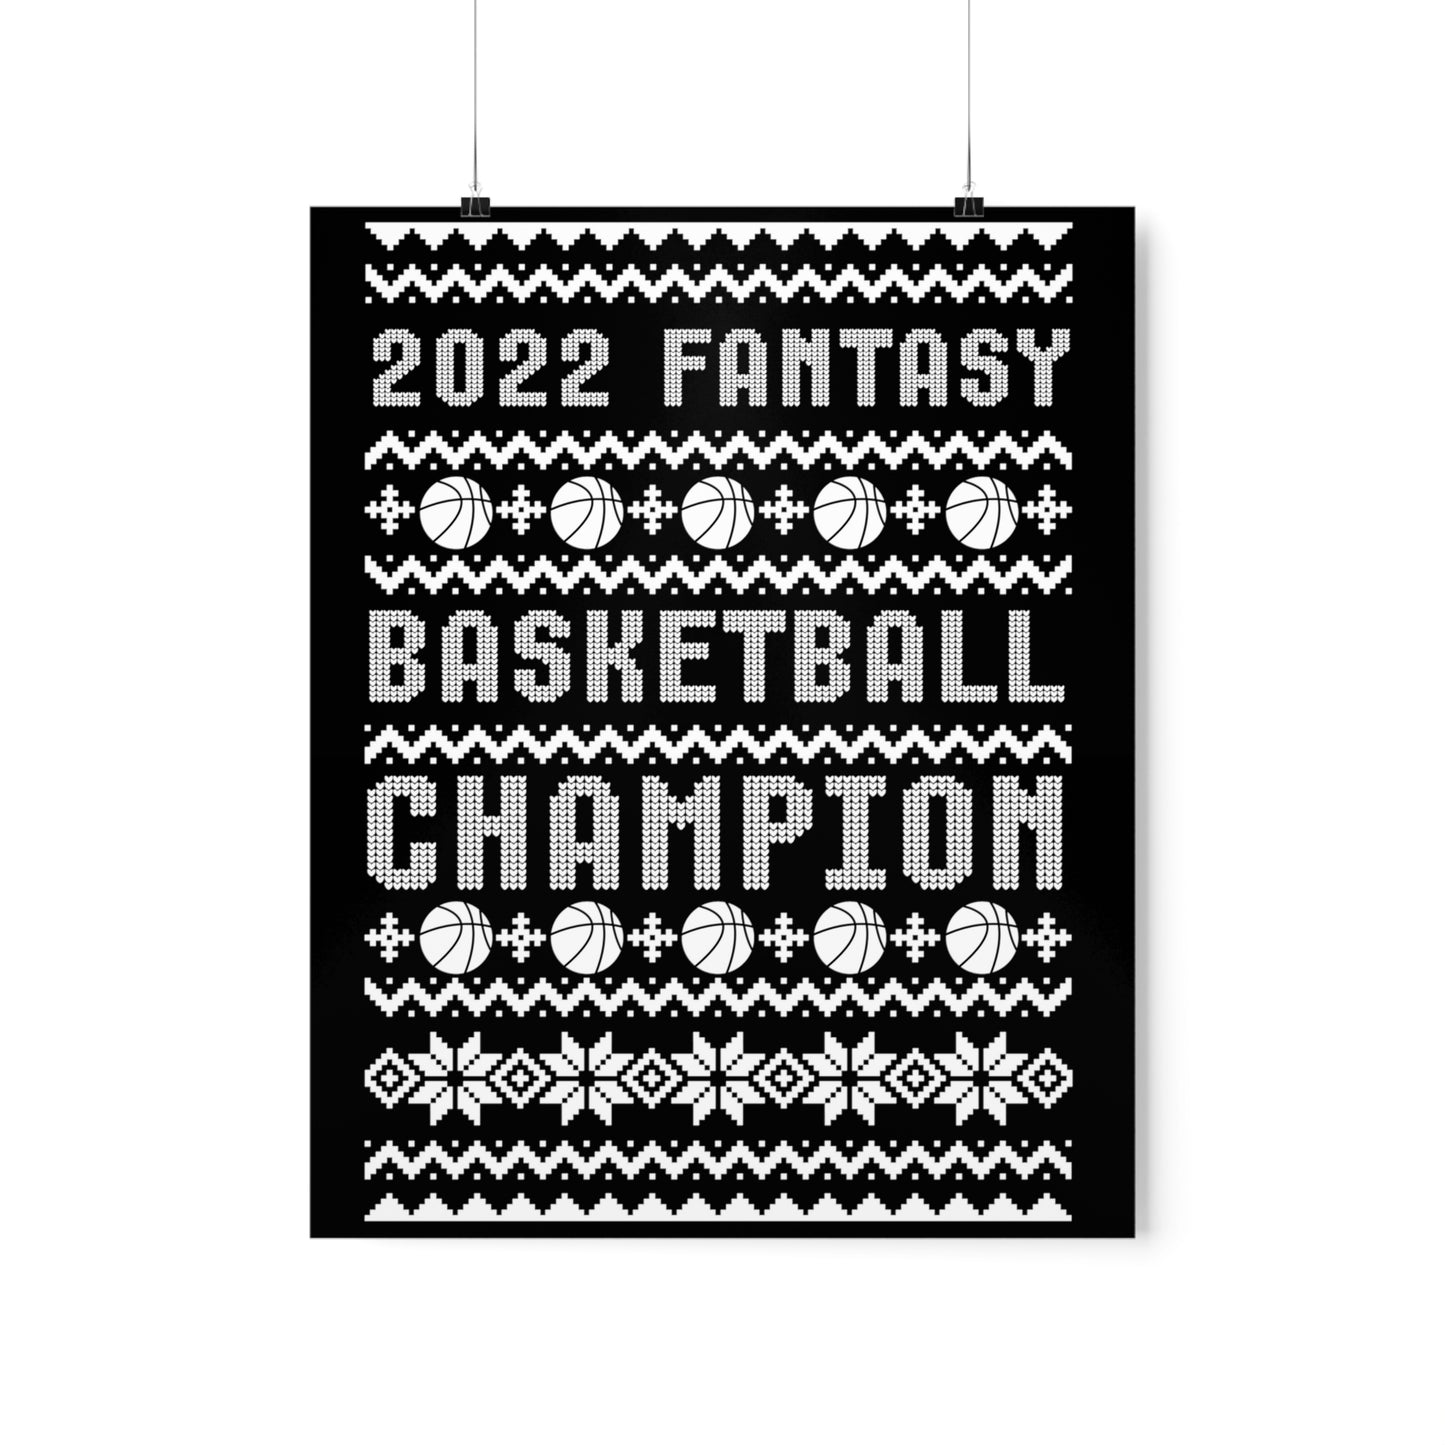 2022 Fantasy Basketball Champion Ugly Christmas Holiday Champ Premium Matte Poster